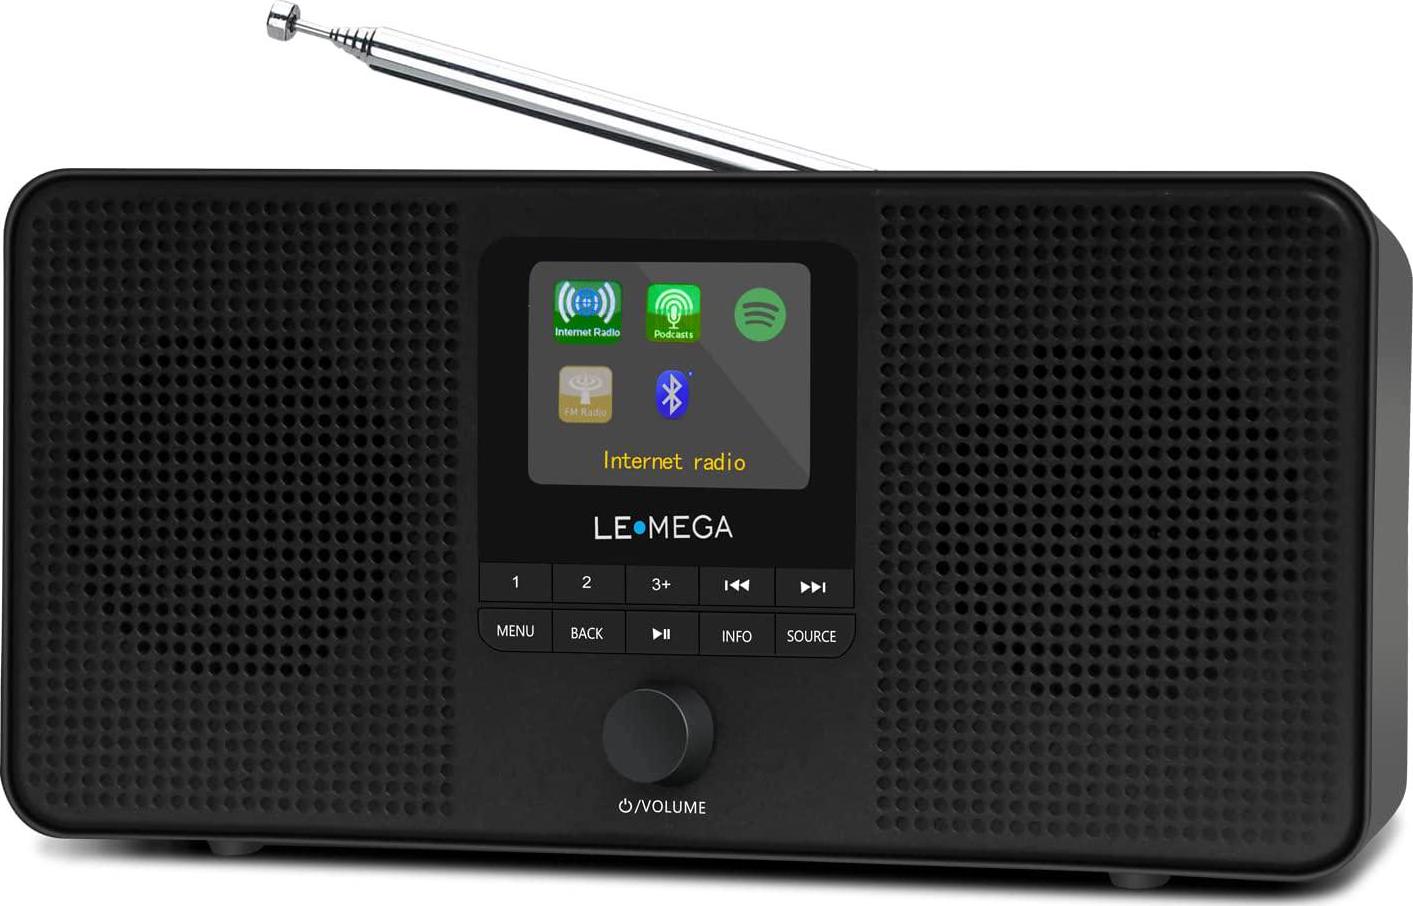 LEMEGA, LEMEGA IR4S Portable Stereo Internet Radio,FM Digital Radio,WiFi,Spotify Connect,Bluetooth,Dual Alarms&Clock,Kitchen/Sleep/Snooze Timer,40 Pre-Sets,Headphones-Black